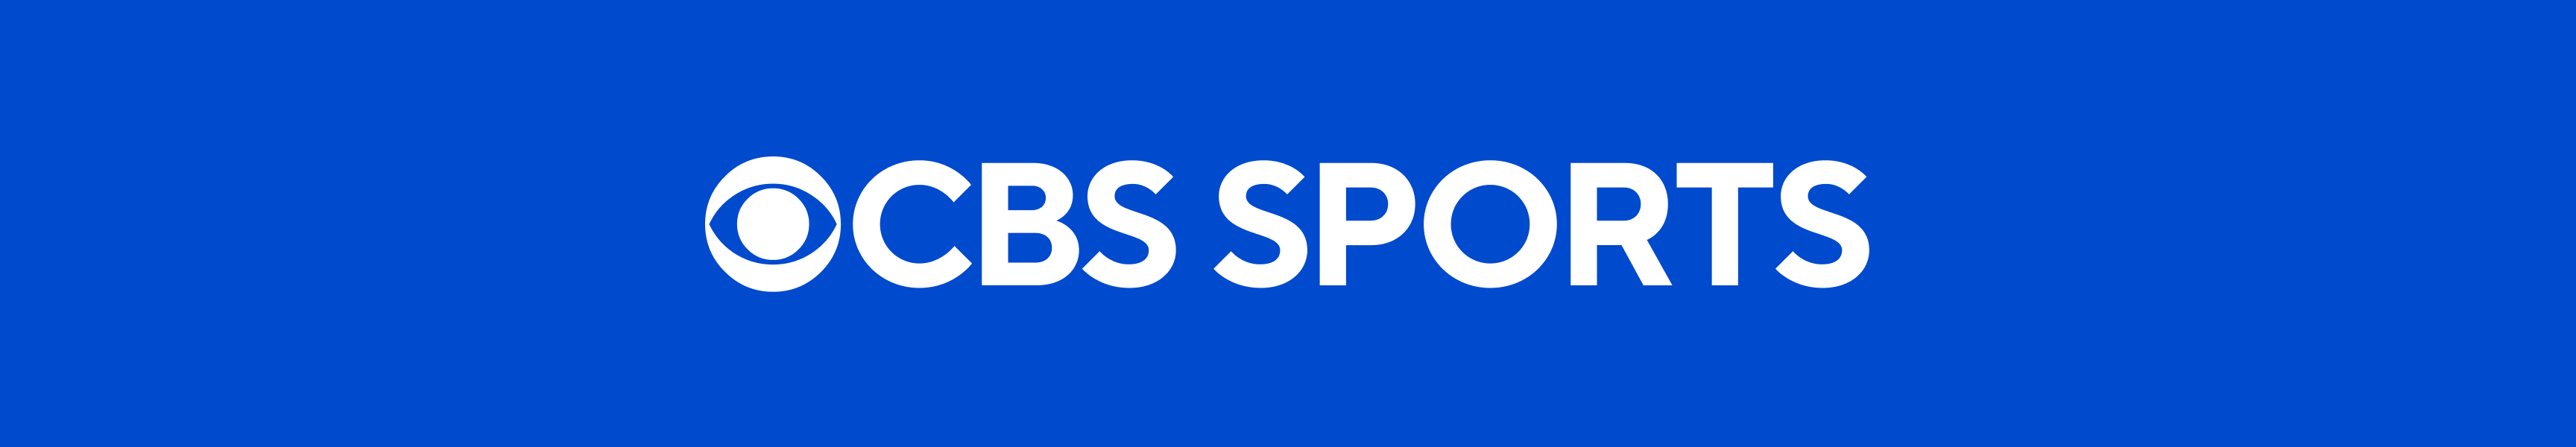 CBS Sports Drinkware